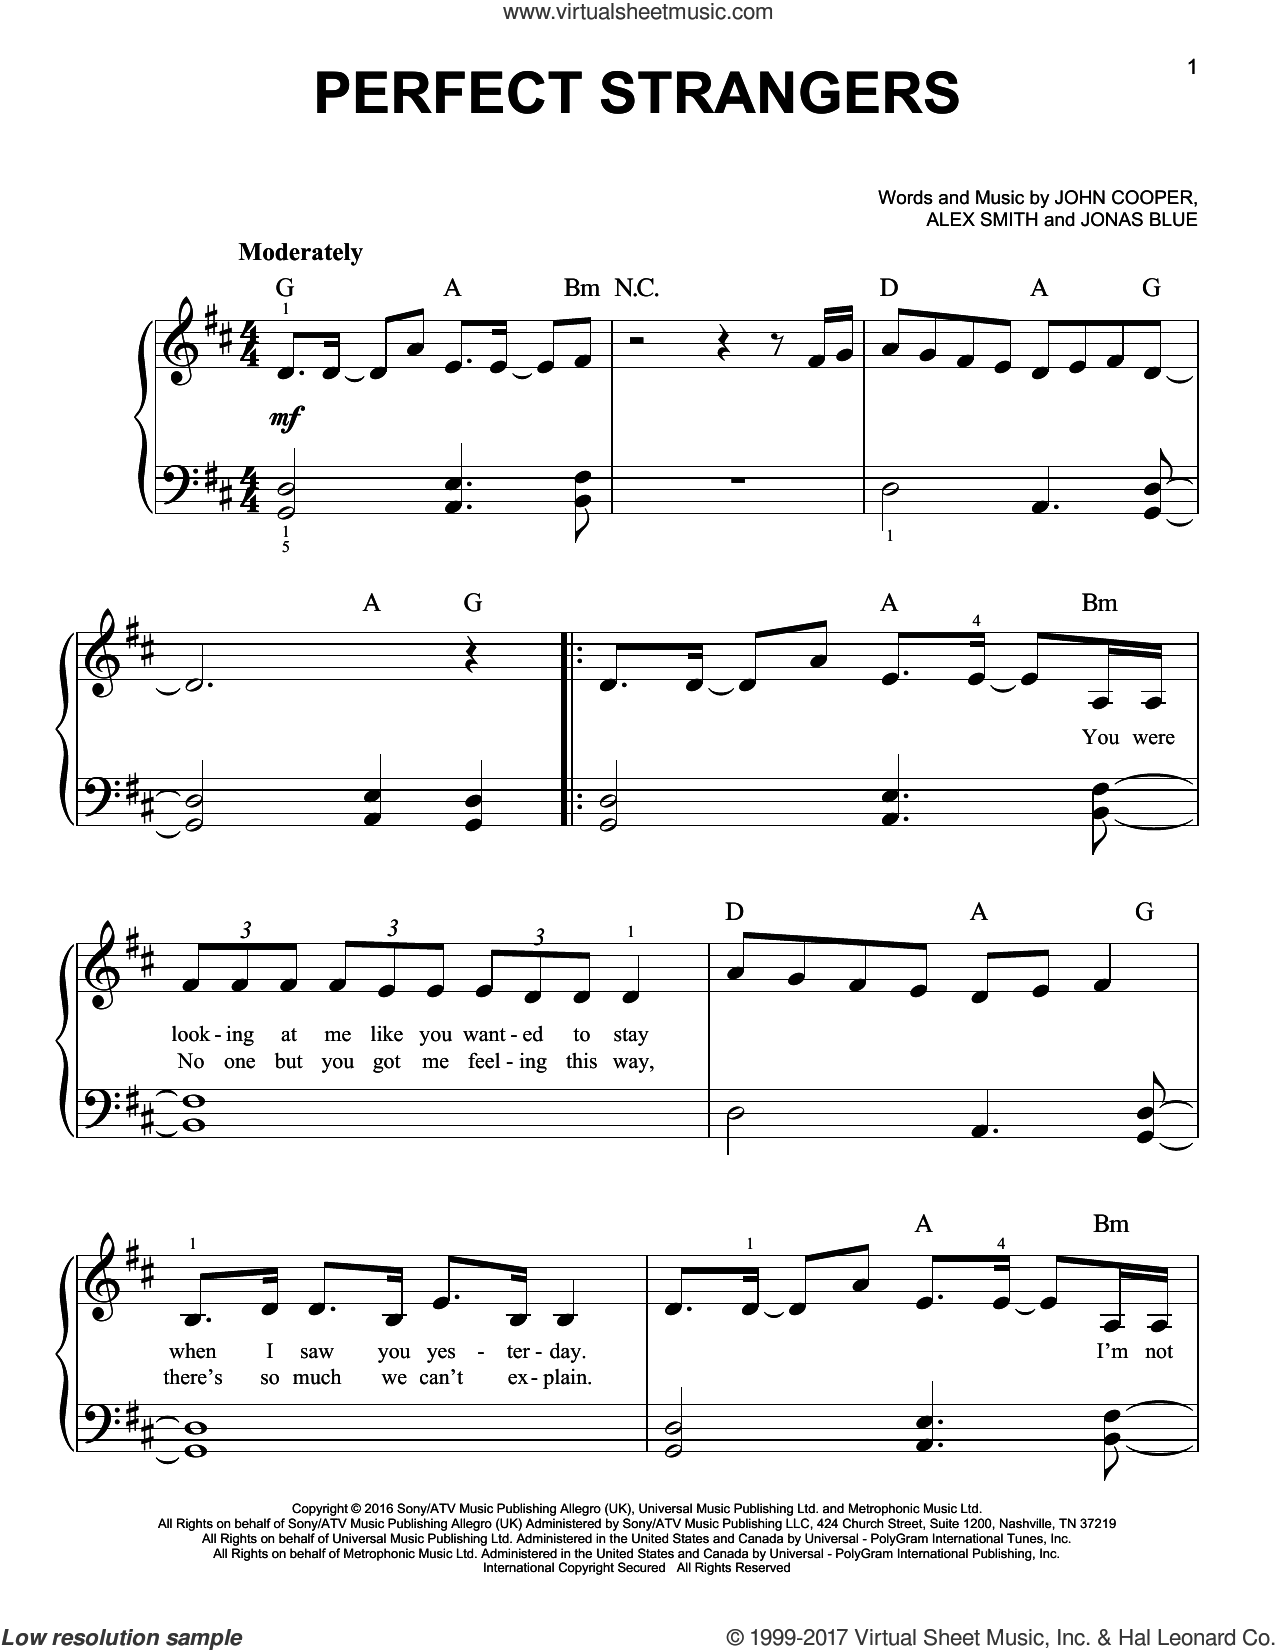 Perfect Strangers- Jonas Blue song s…: English ESL worksheets pdf